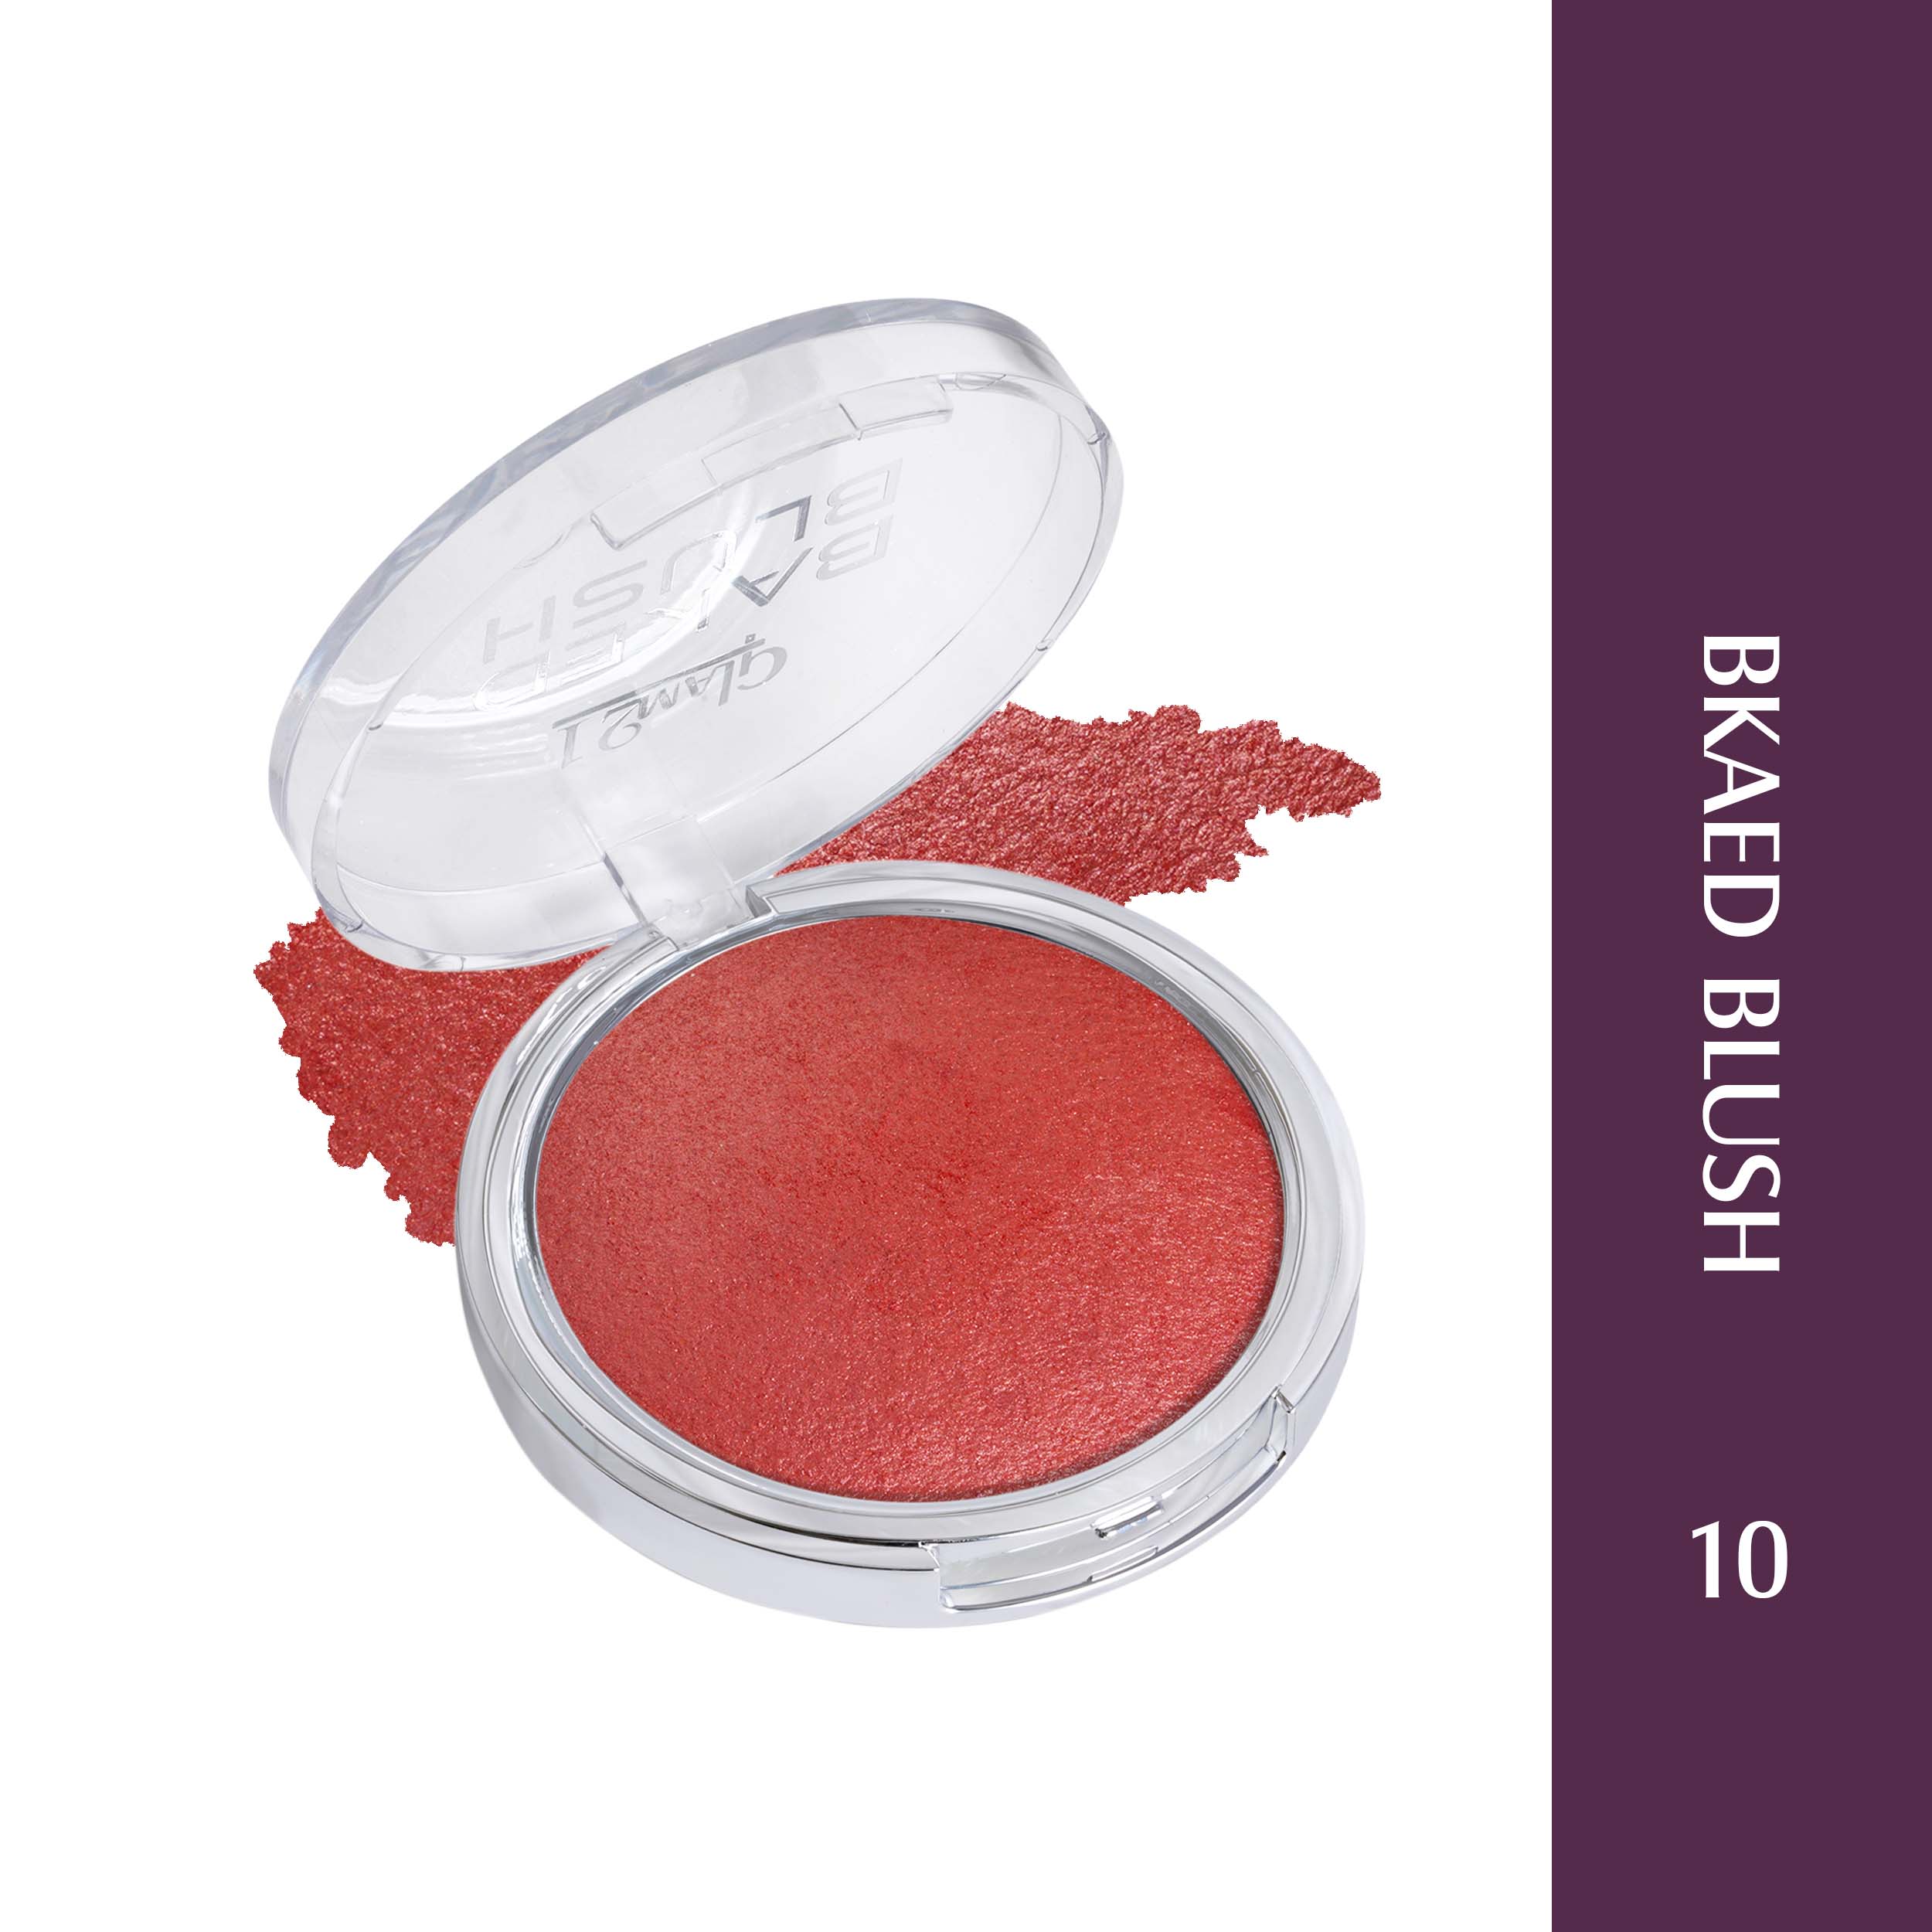 Glam21 Baked Blush Highly Pigmented Formula, Long-Lasting, Illuminating Texture, 6g (Shade-10)